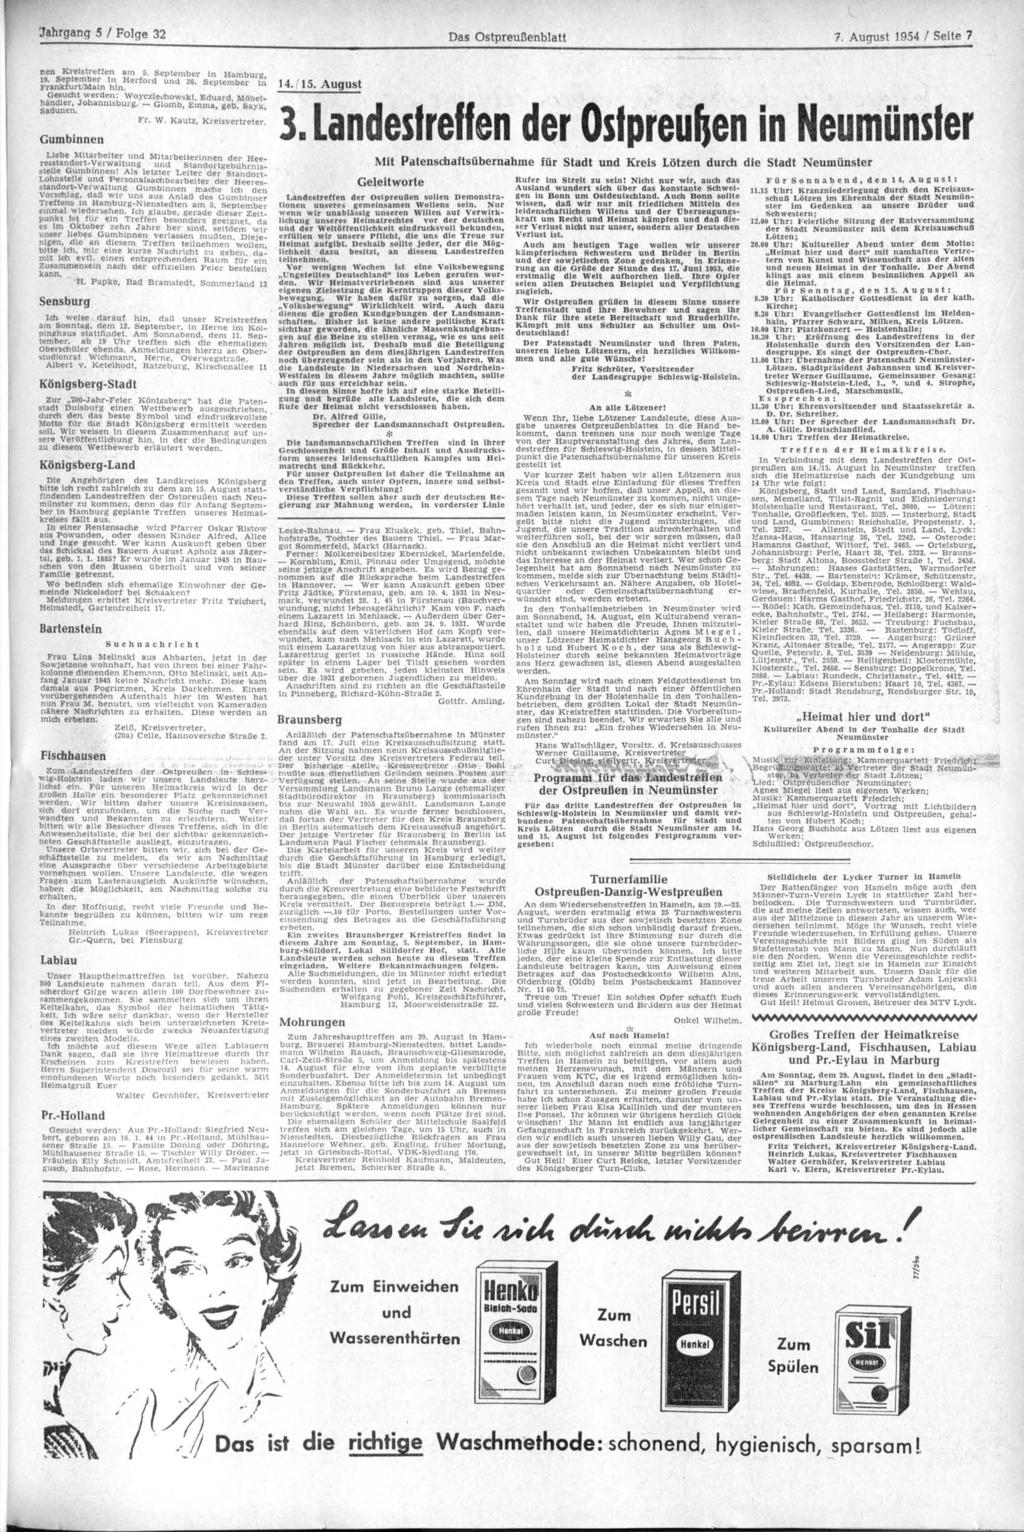 'Jahrgang 5 / Folge 32 Das Ostpreußenblatt 7. August 1954 / Seite 7 nen Kreistreffen am 5. September in Hamburg. 19. September in Herford und 26. September in p U C I m Frankfurt/Main hin. 14./15.